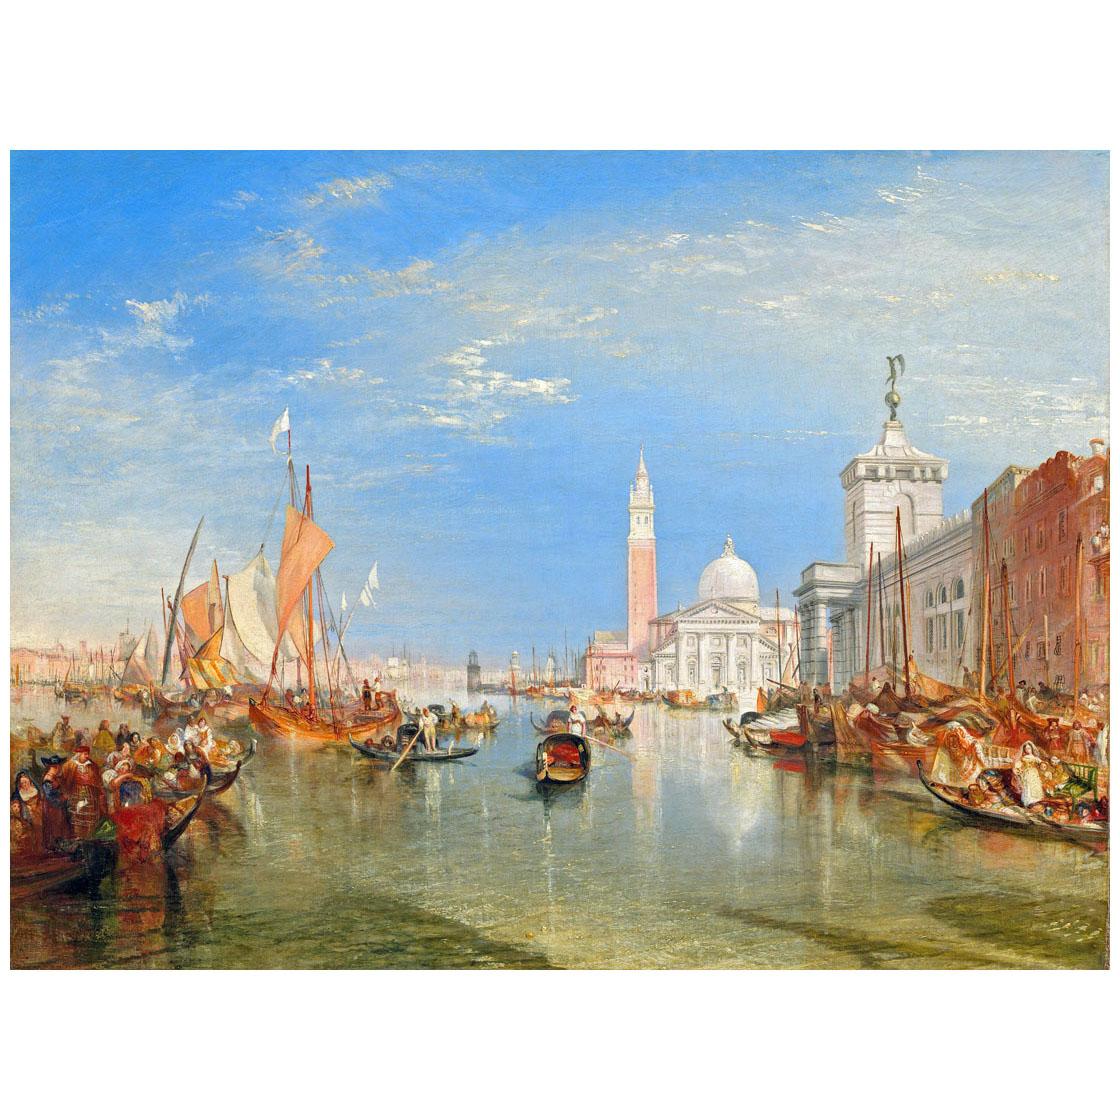 William Turner. Venice. 1834. National Gallery of Art Washington